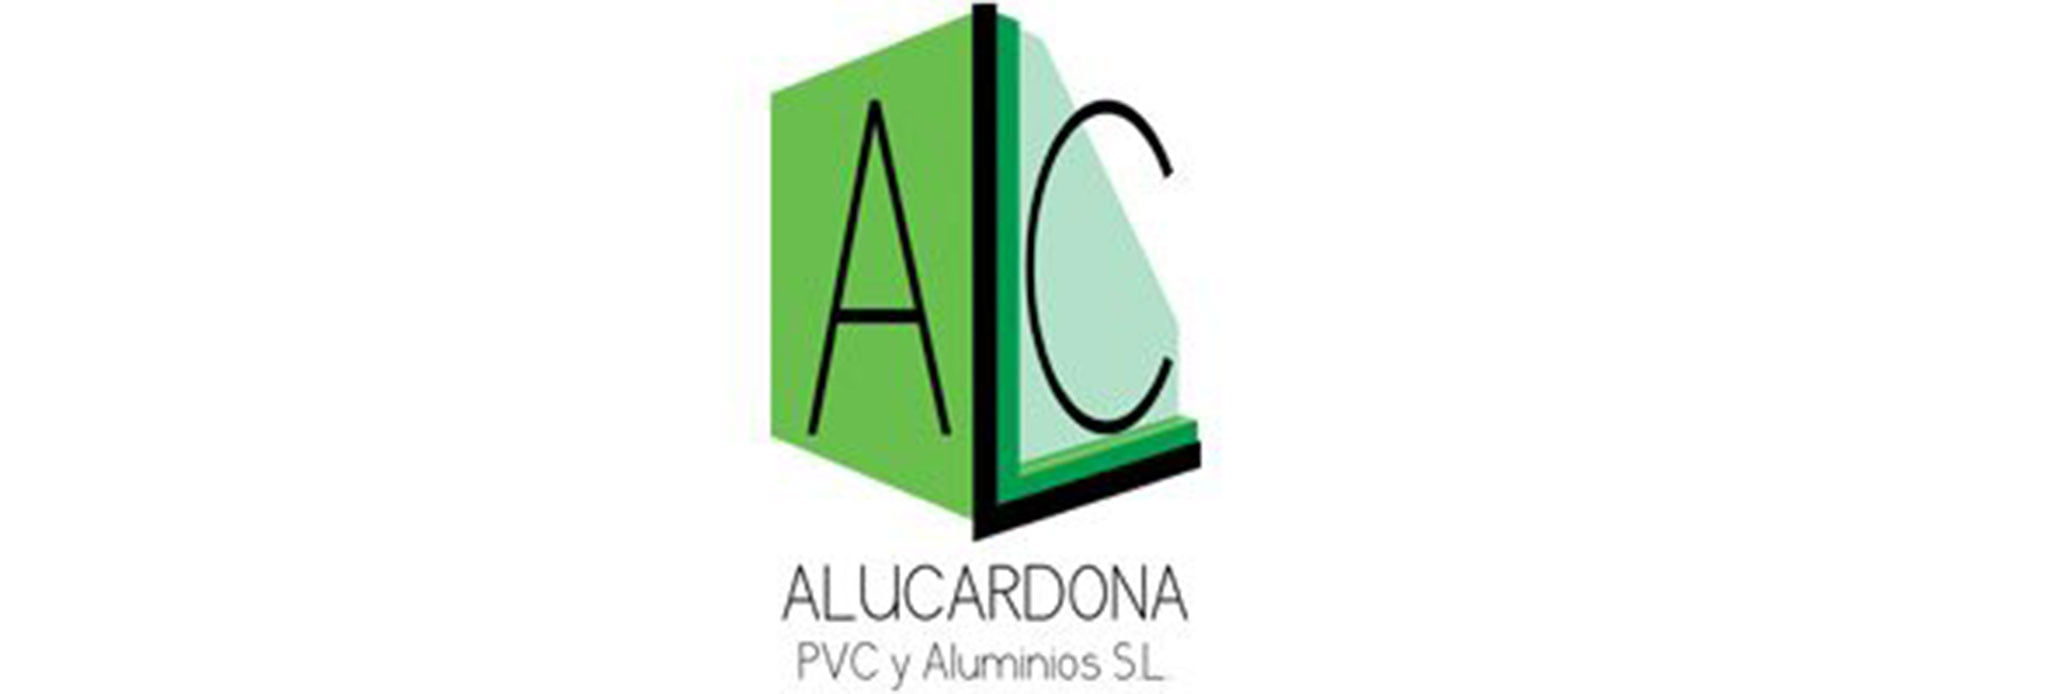 Logotipo Alucardona Pvc y Aluminios, S.L.